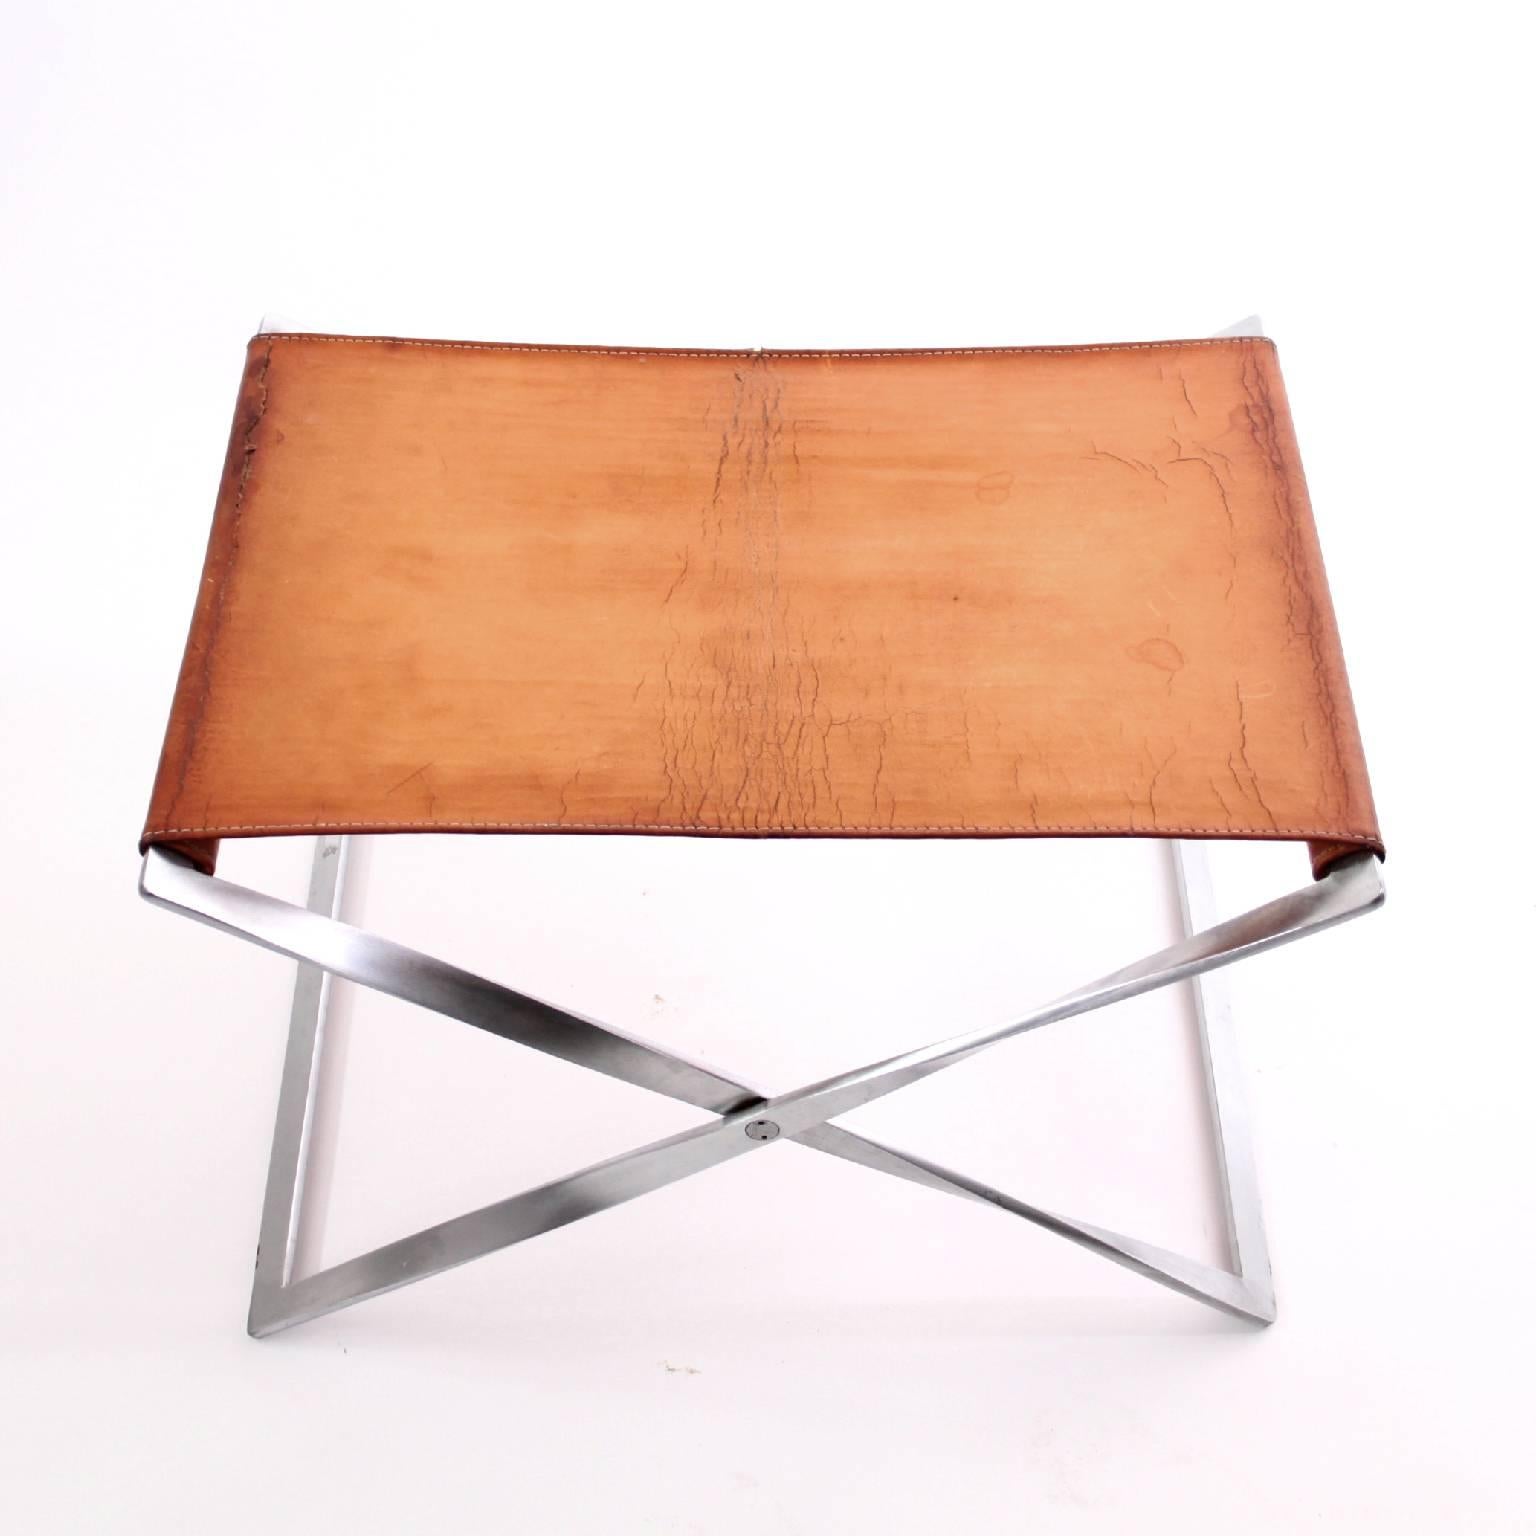 PK 91 folding stool by Poul Kjærholm.

Designed 1961.

Manufactured by E. Kold Christensen A/S, Copenhagen, Denmark.

Materials: original natural leather, matte, chromed-plated steel frame.

A trained cabinetmaker, Poul Kjærholm’s use of